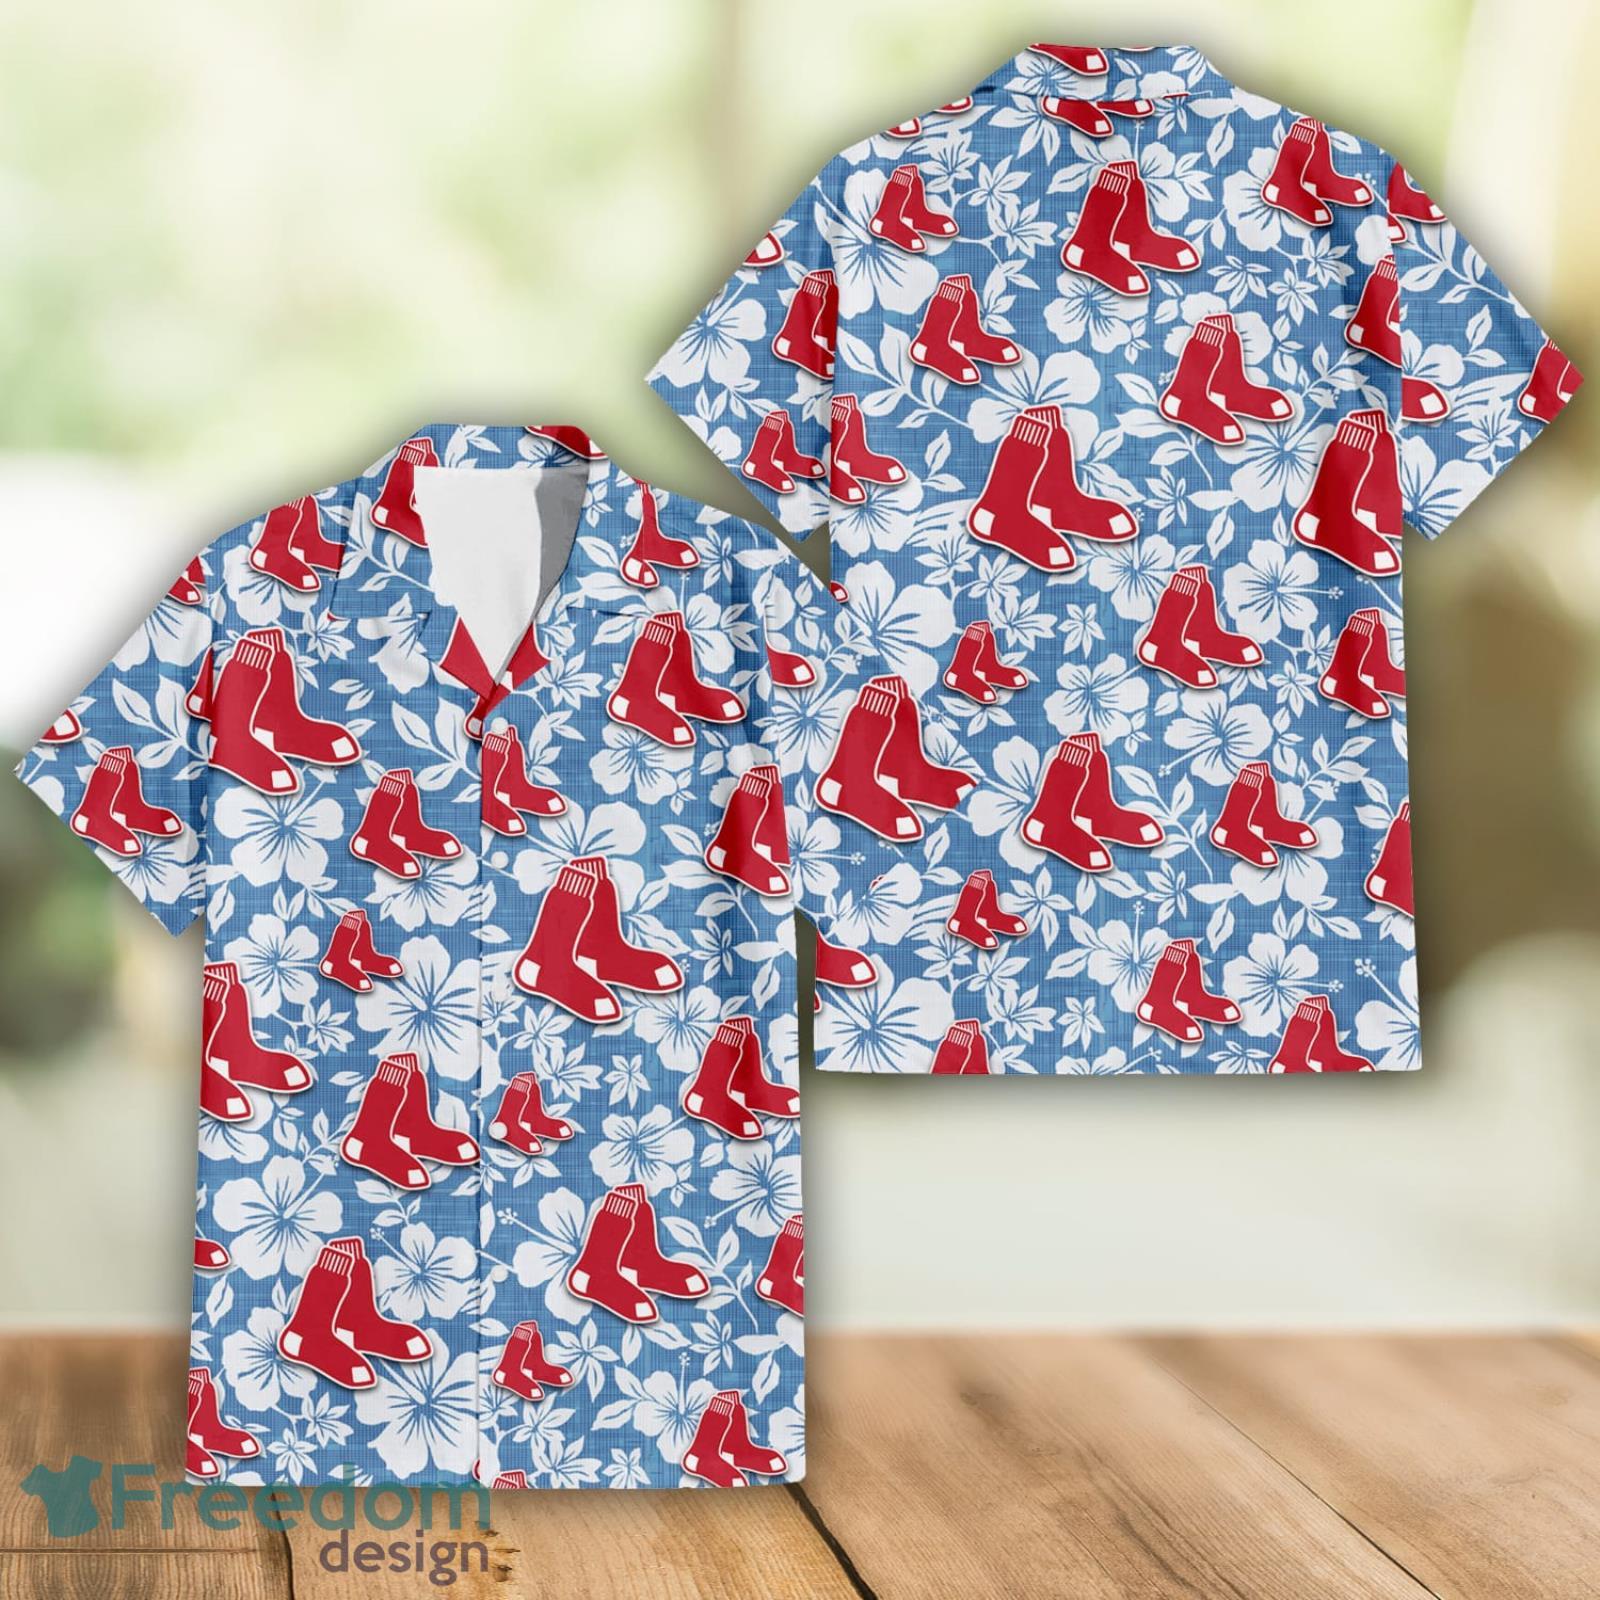 Miami Marlins Pink Hibiscus Tropical Men And Womwn Summer Gift Hawaiian  Shirt - Freedomdesign